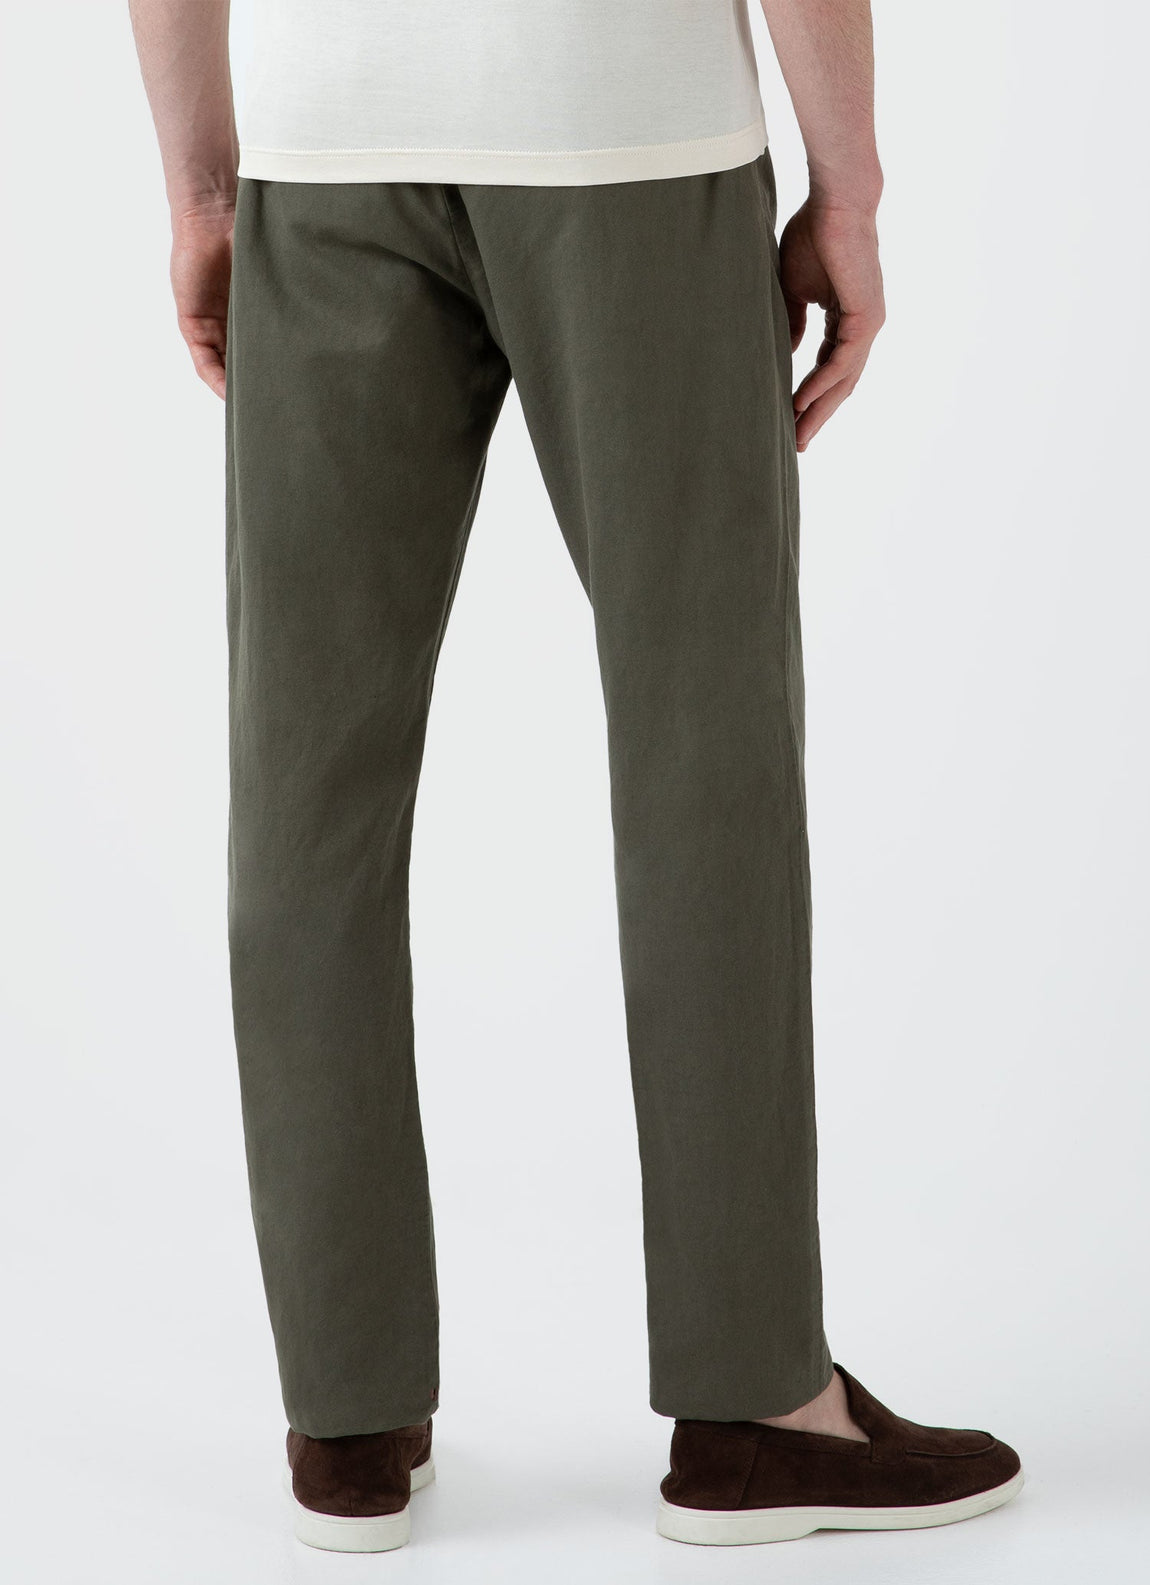 Men's Cotton Linen Drawstring Trouser in Khaki